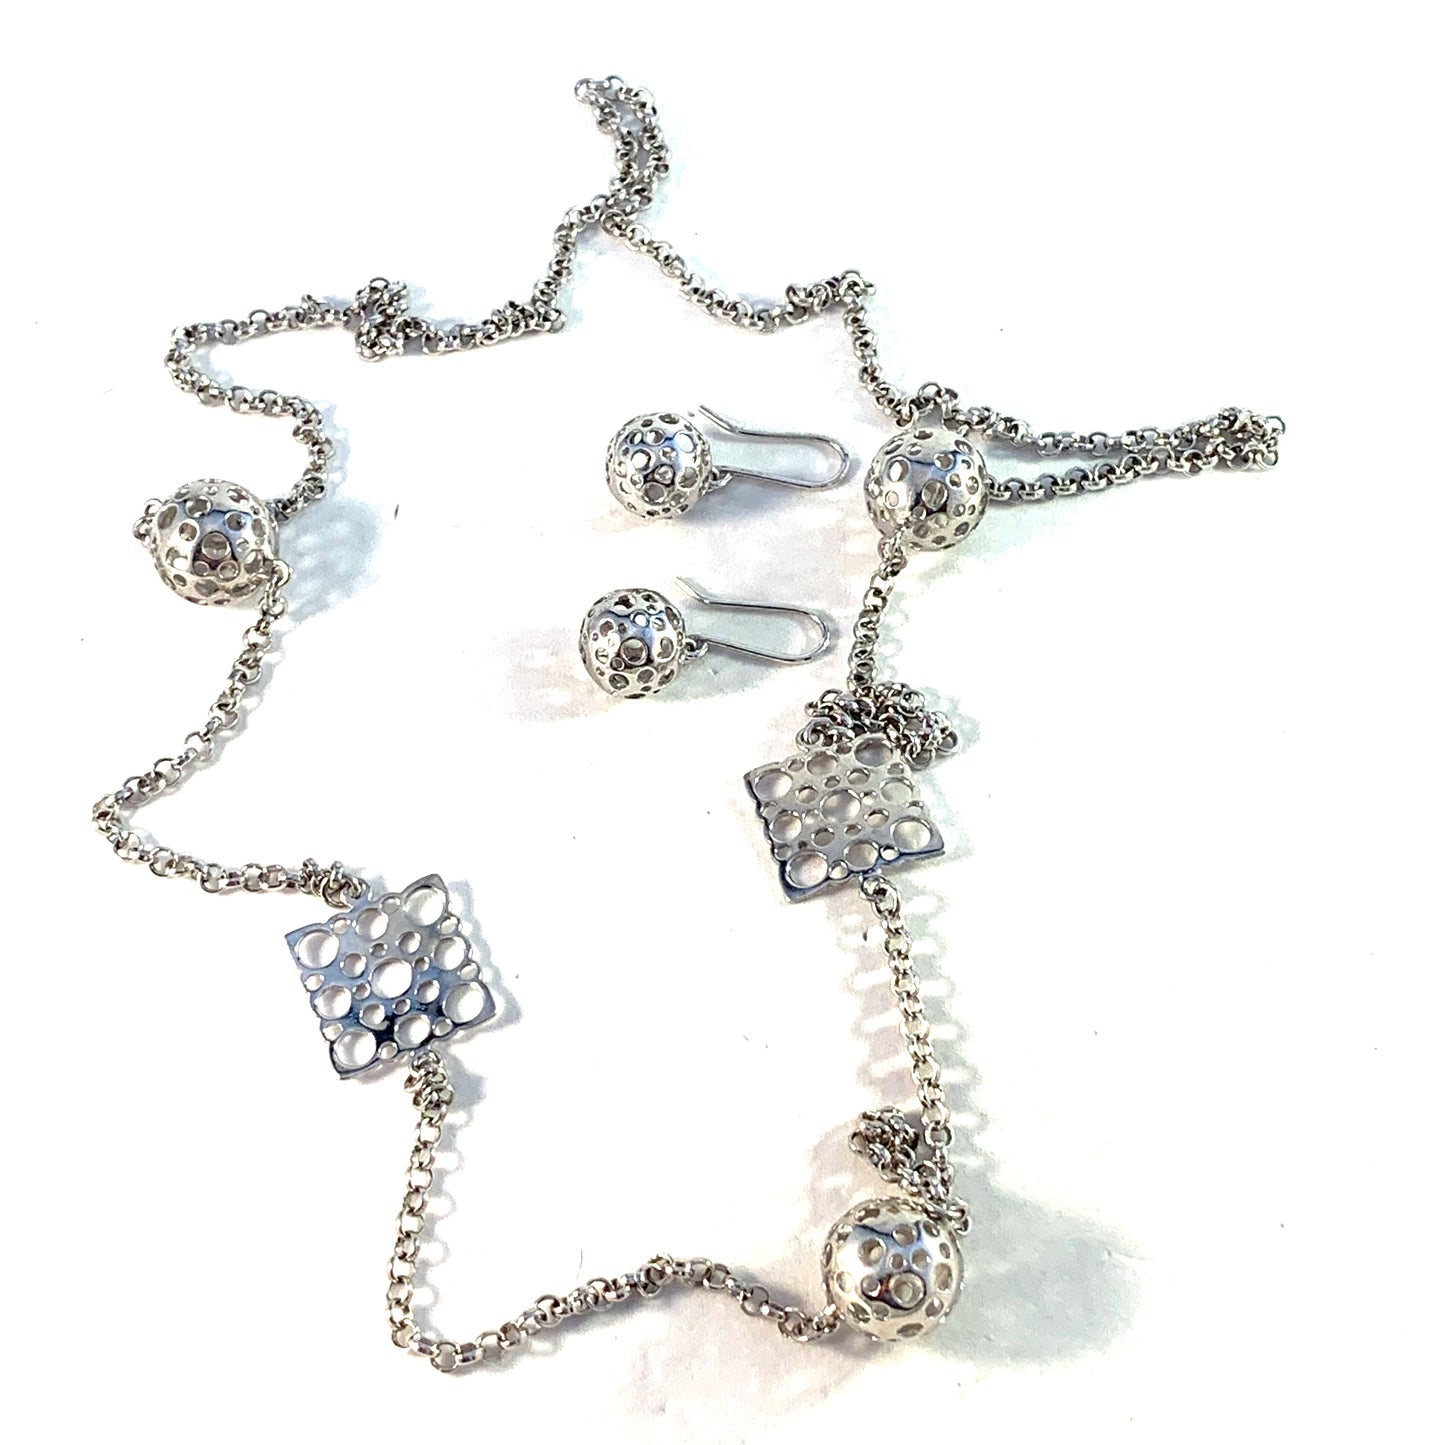 Liisa Vitali for Kultakeskus, Finland, Vintage Sterling Silver Necklace and Earrings